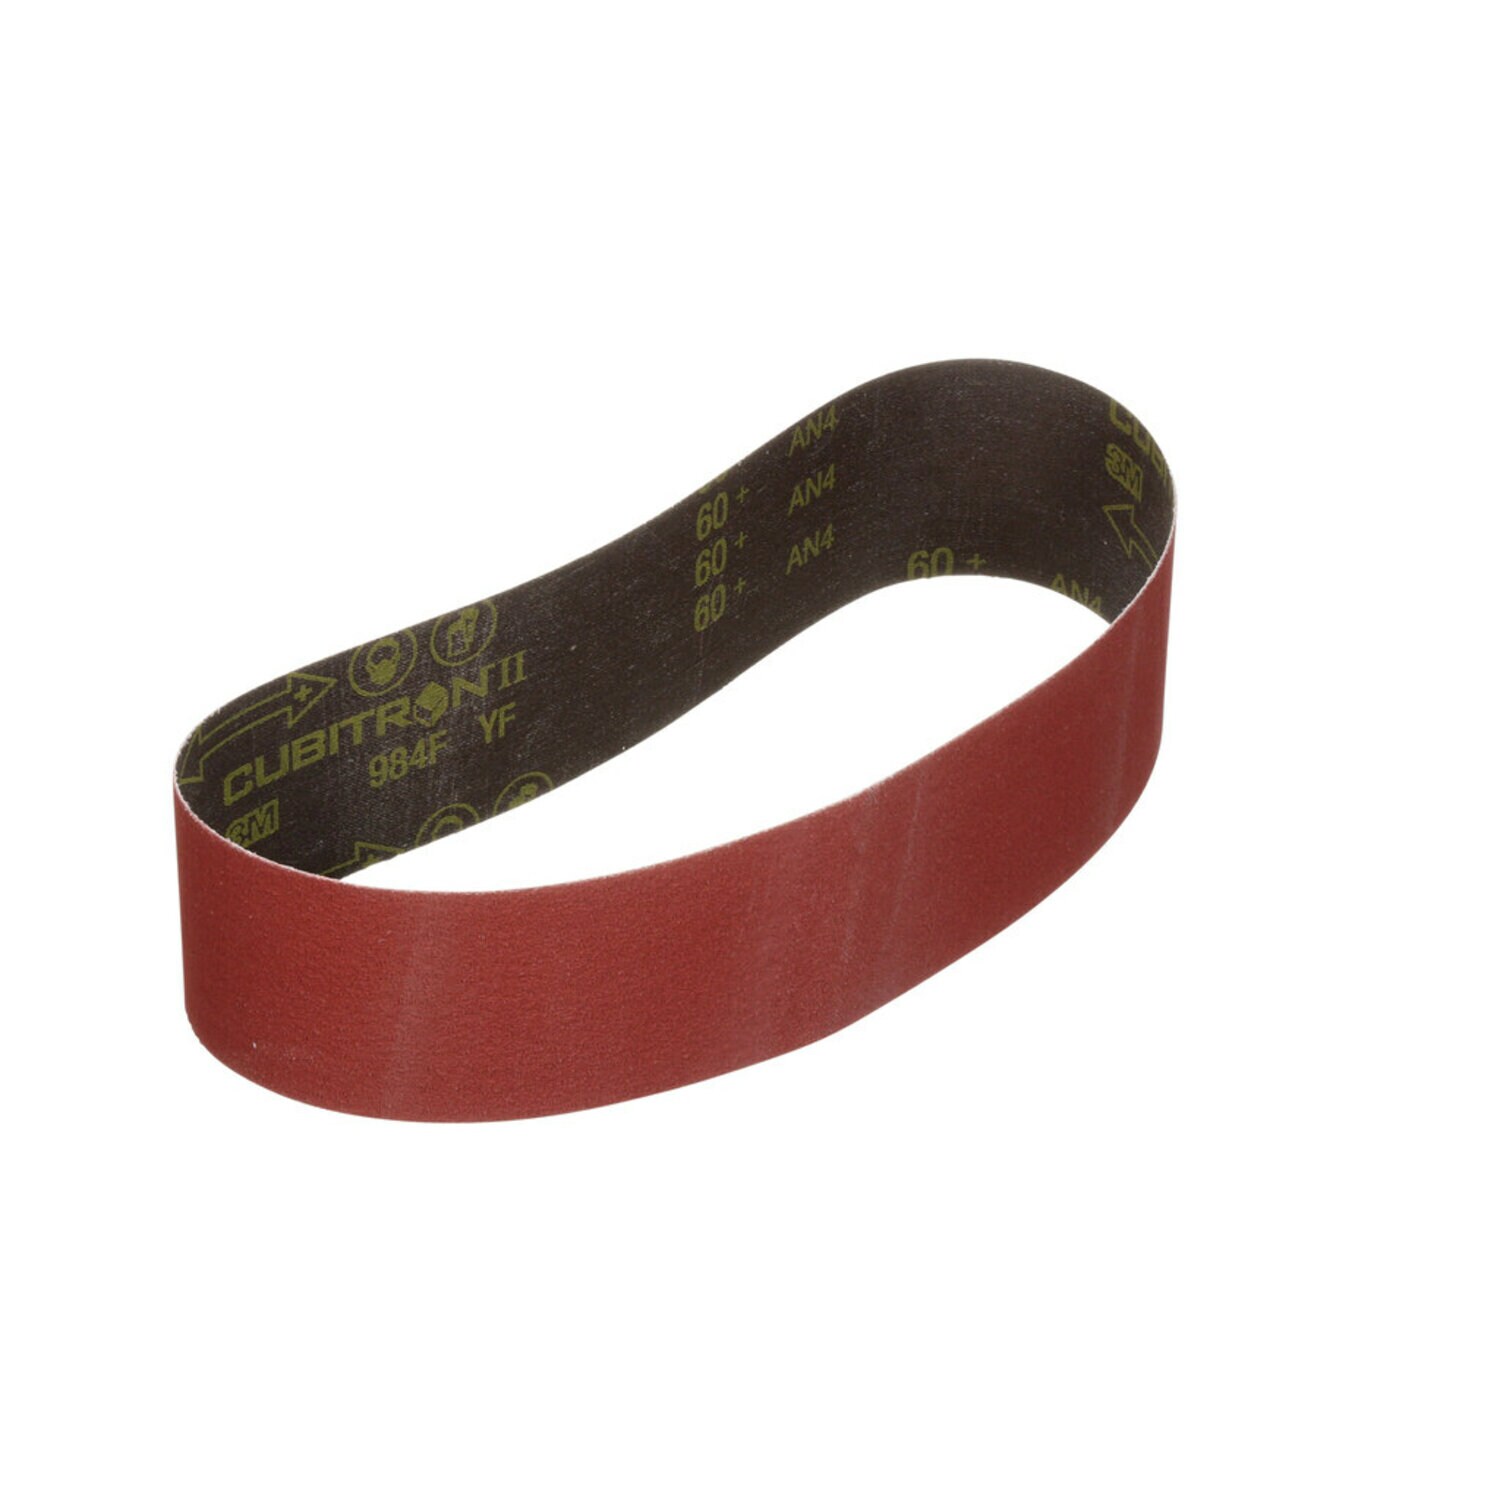 7010511343 - 3M Cubitron II Cloth Belt 984F, 60+ YF-weight, 6 in x 168 in,
Film-lok, Single-flex